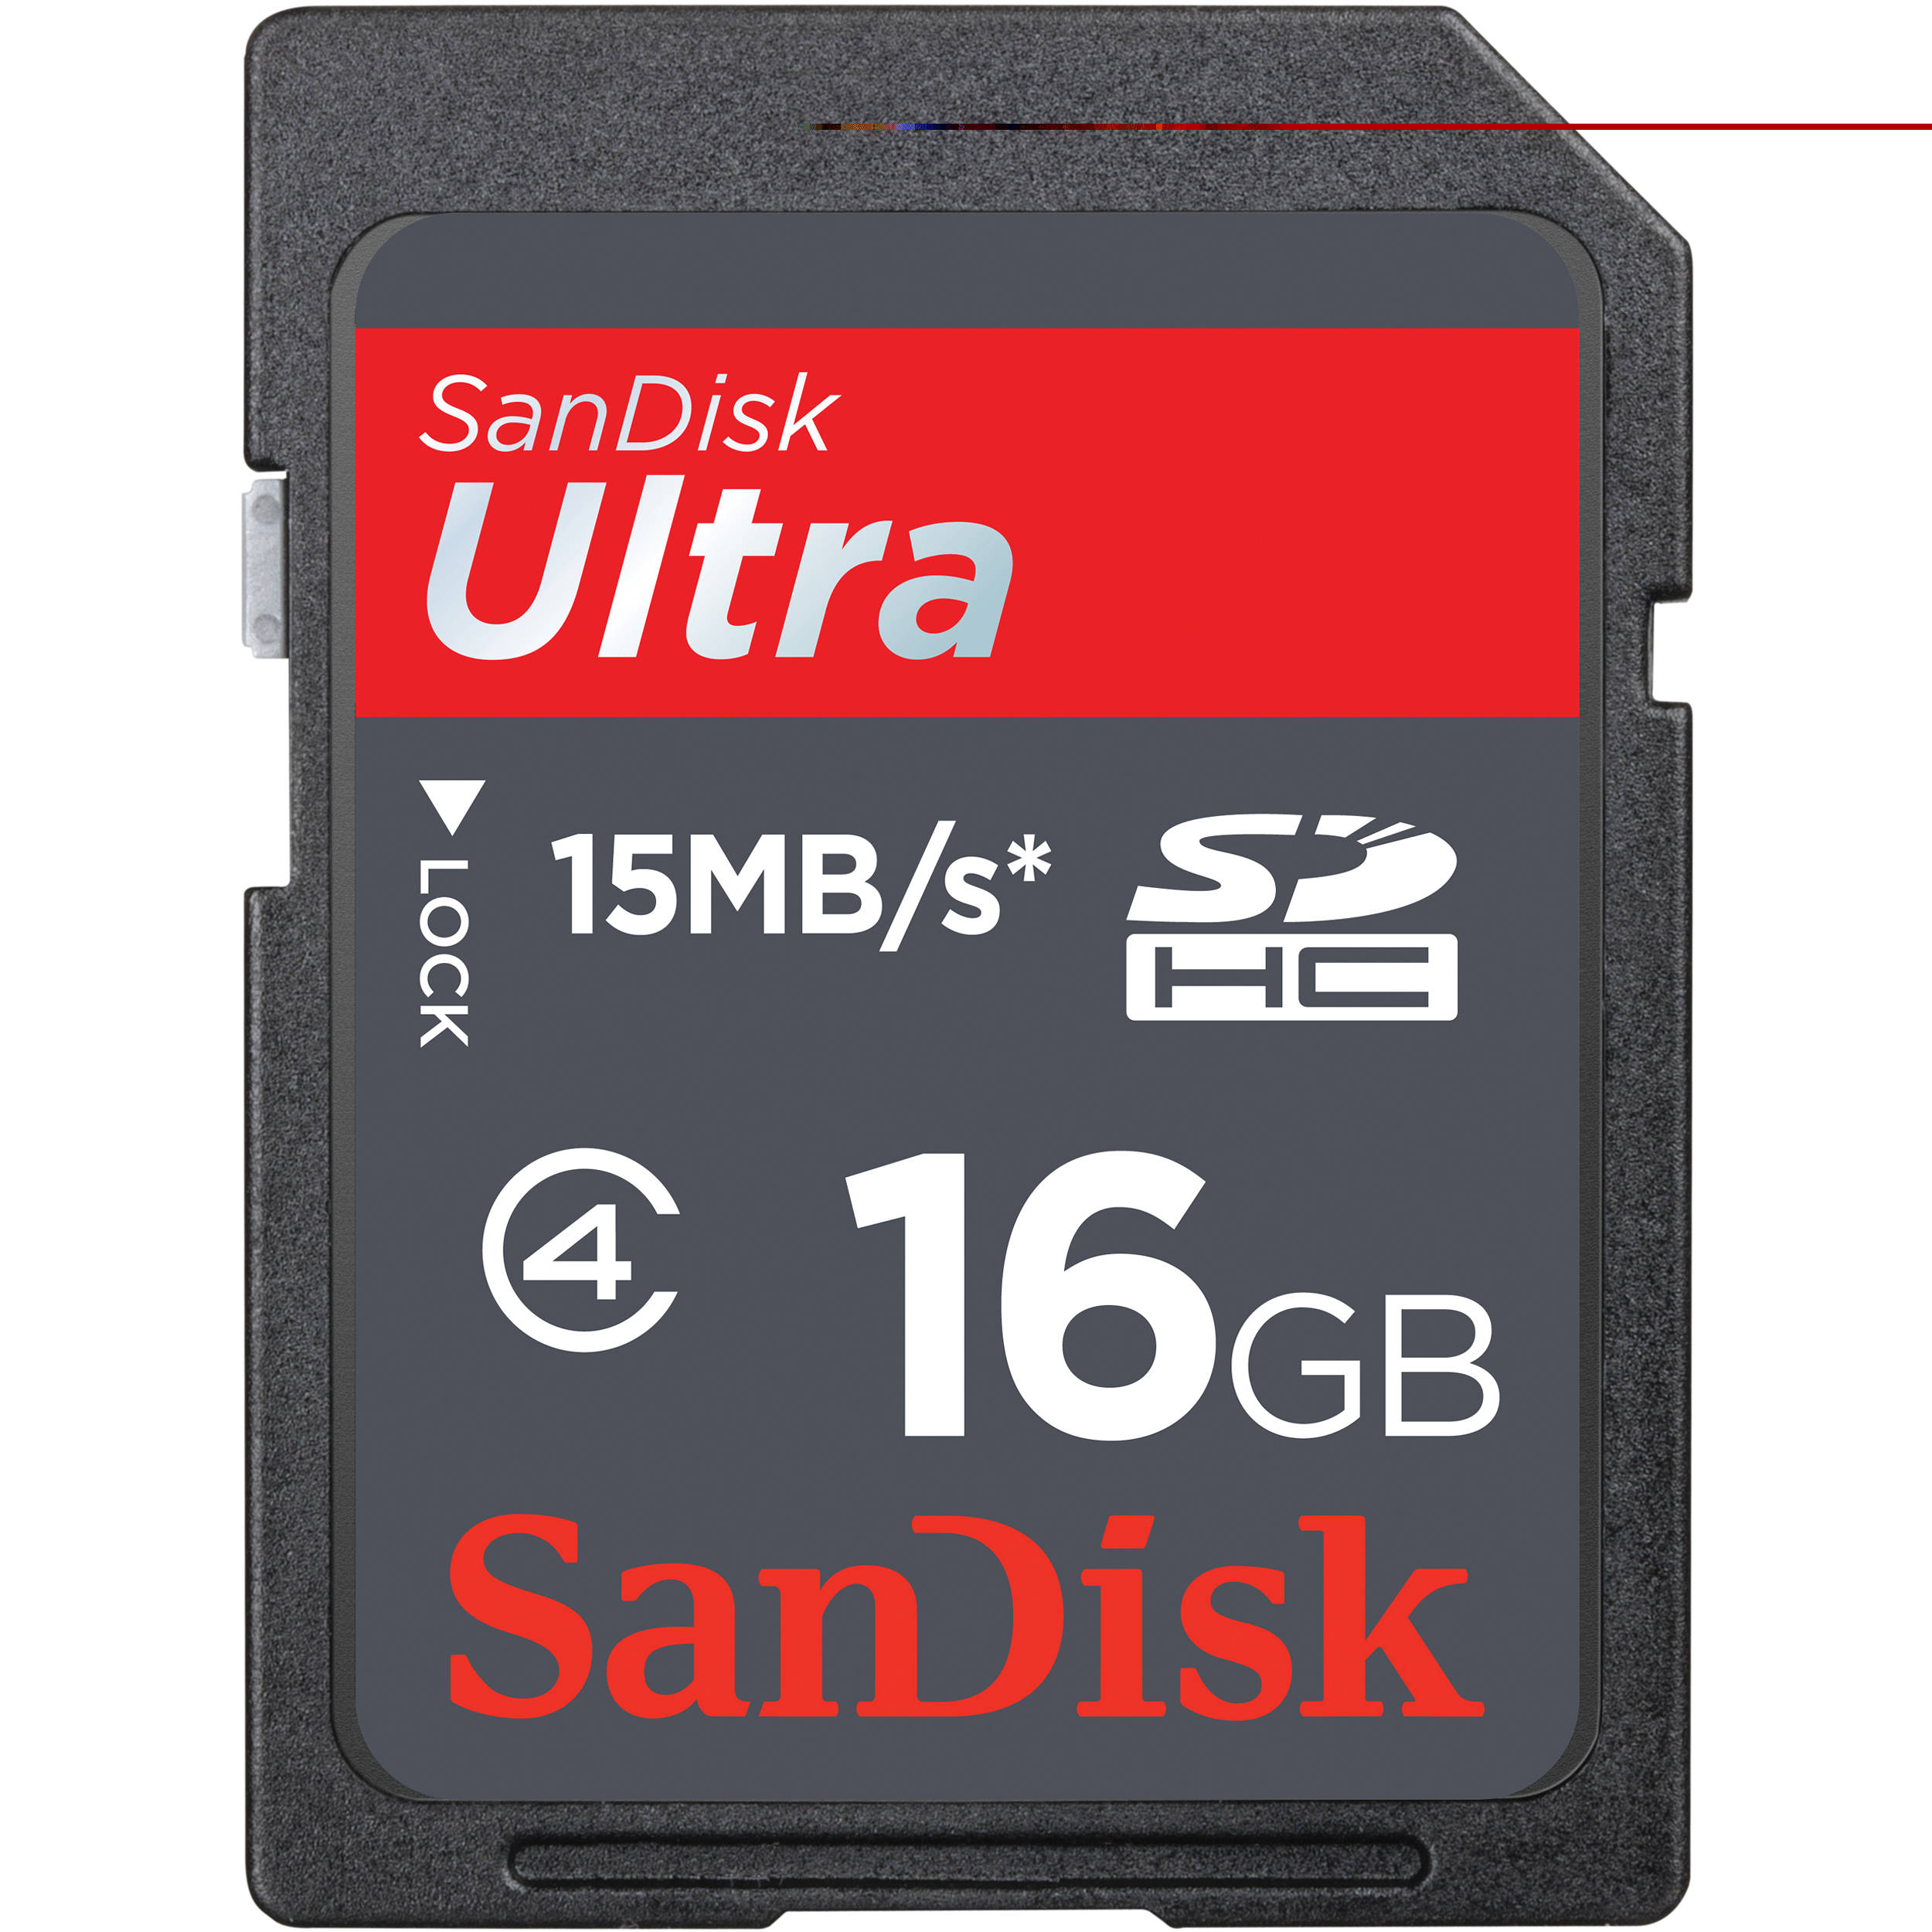 Сд 32 гб купить. SANDISK Ultra 32 GB. SANDISK 8gb class 4. SDHC 8гб. Карта памяти SANDISK 8gb Ultra II SDHC Card.